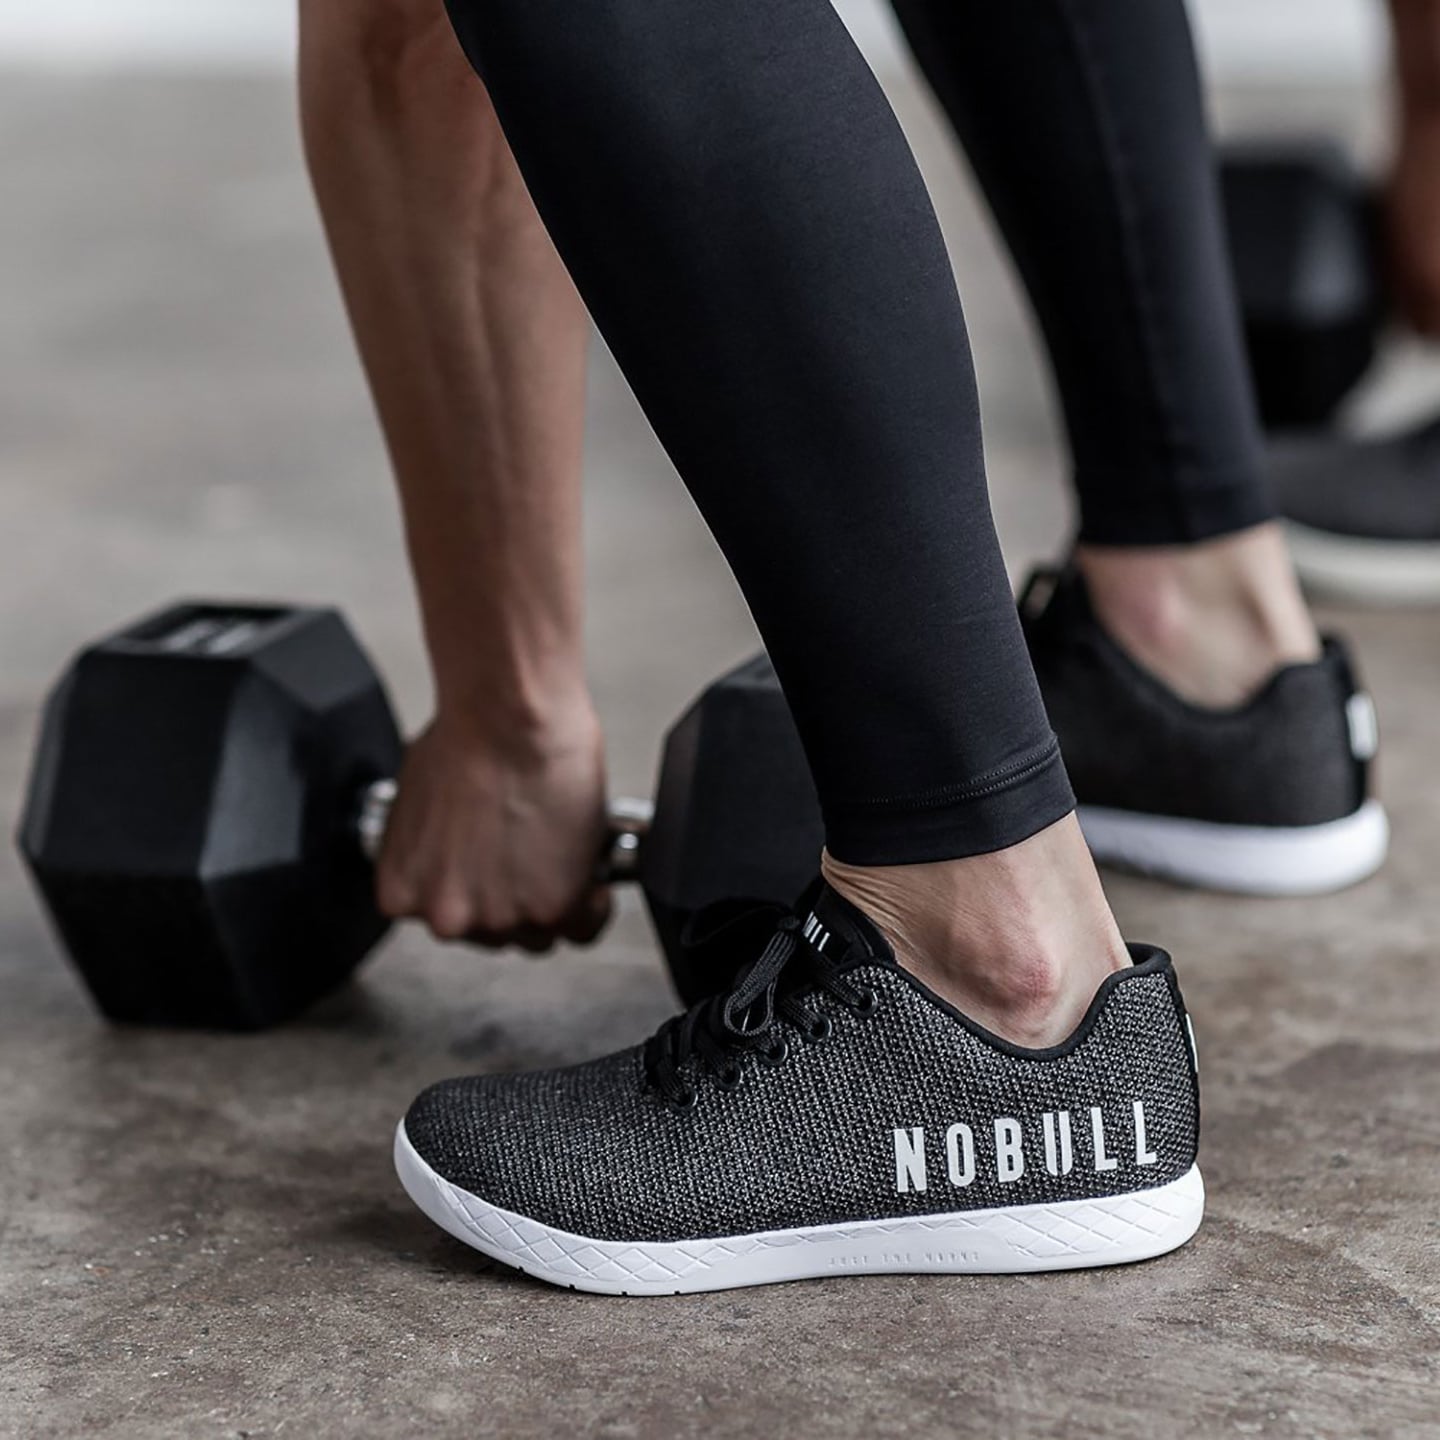 do nobull shoes stretch